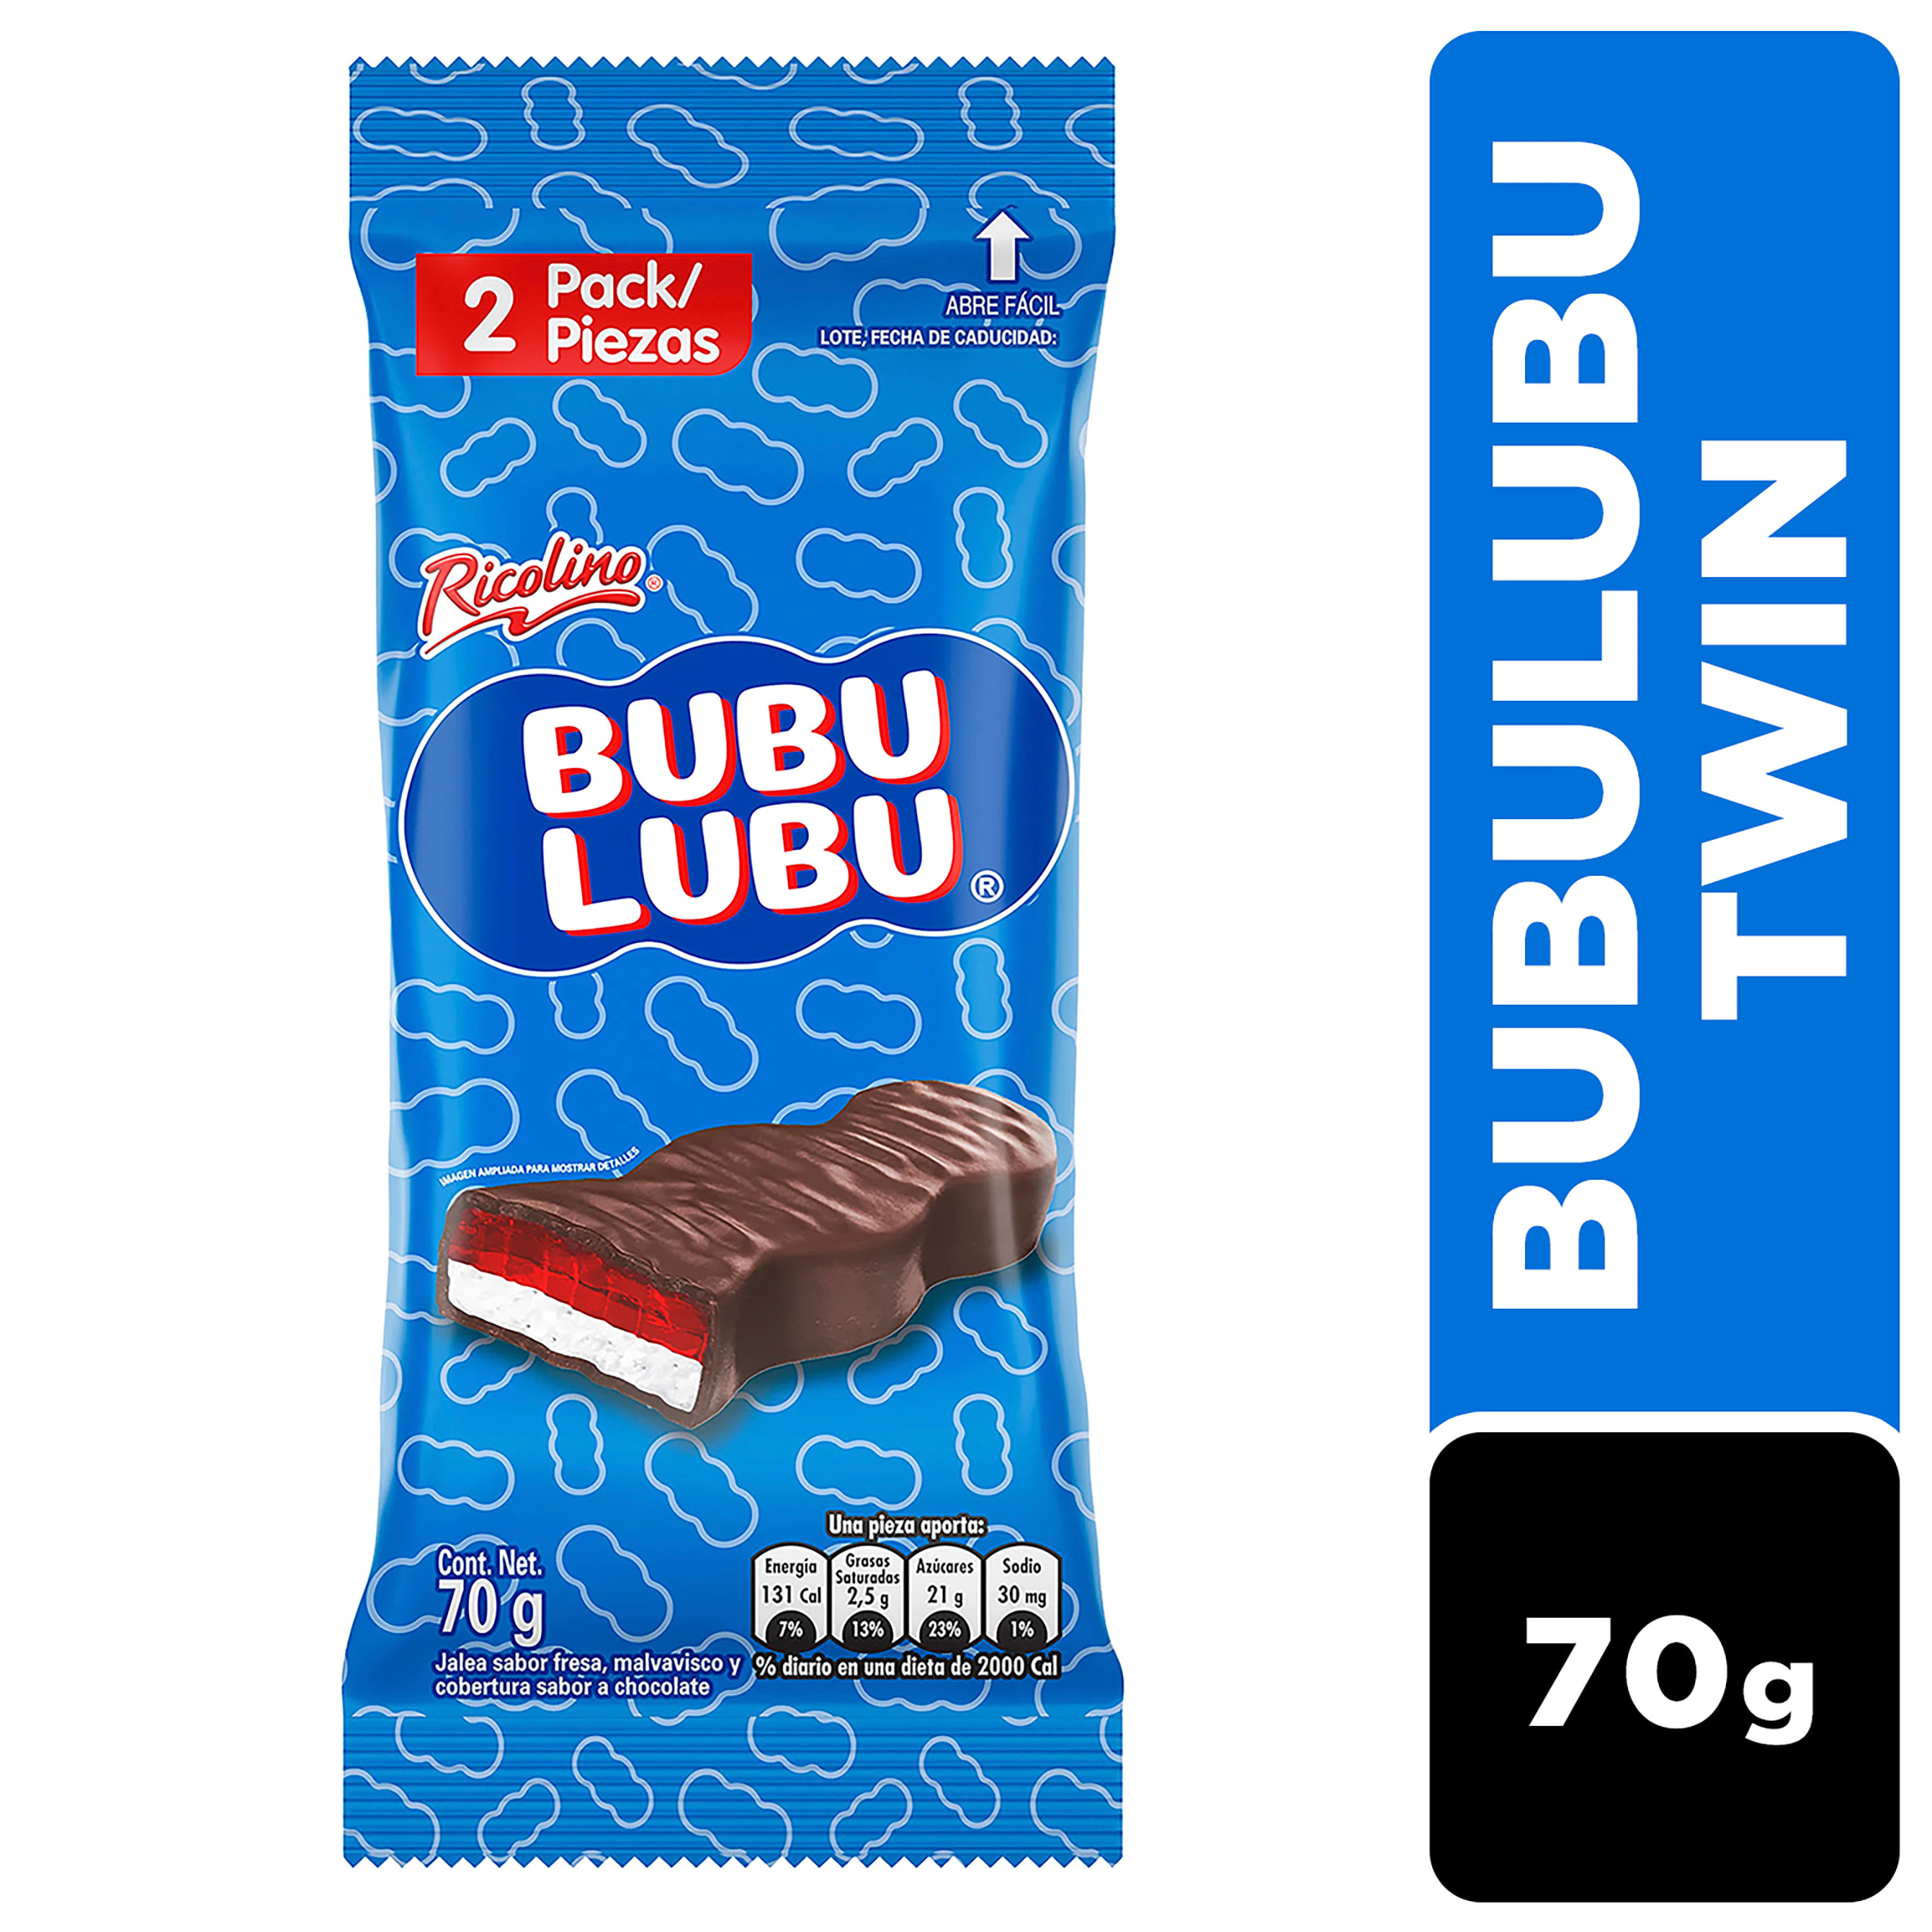 2-Pack-Chocolate-Ricolino-Bubu-Lubu-70gr-1-7209